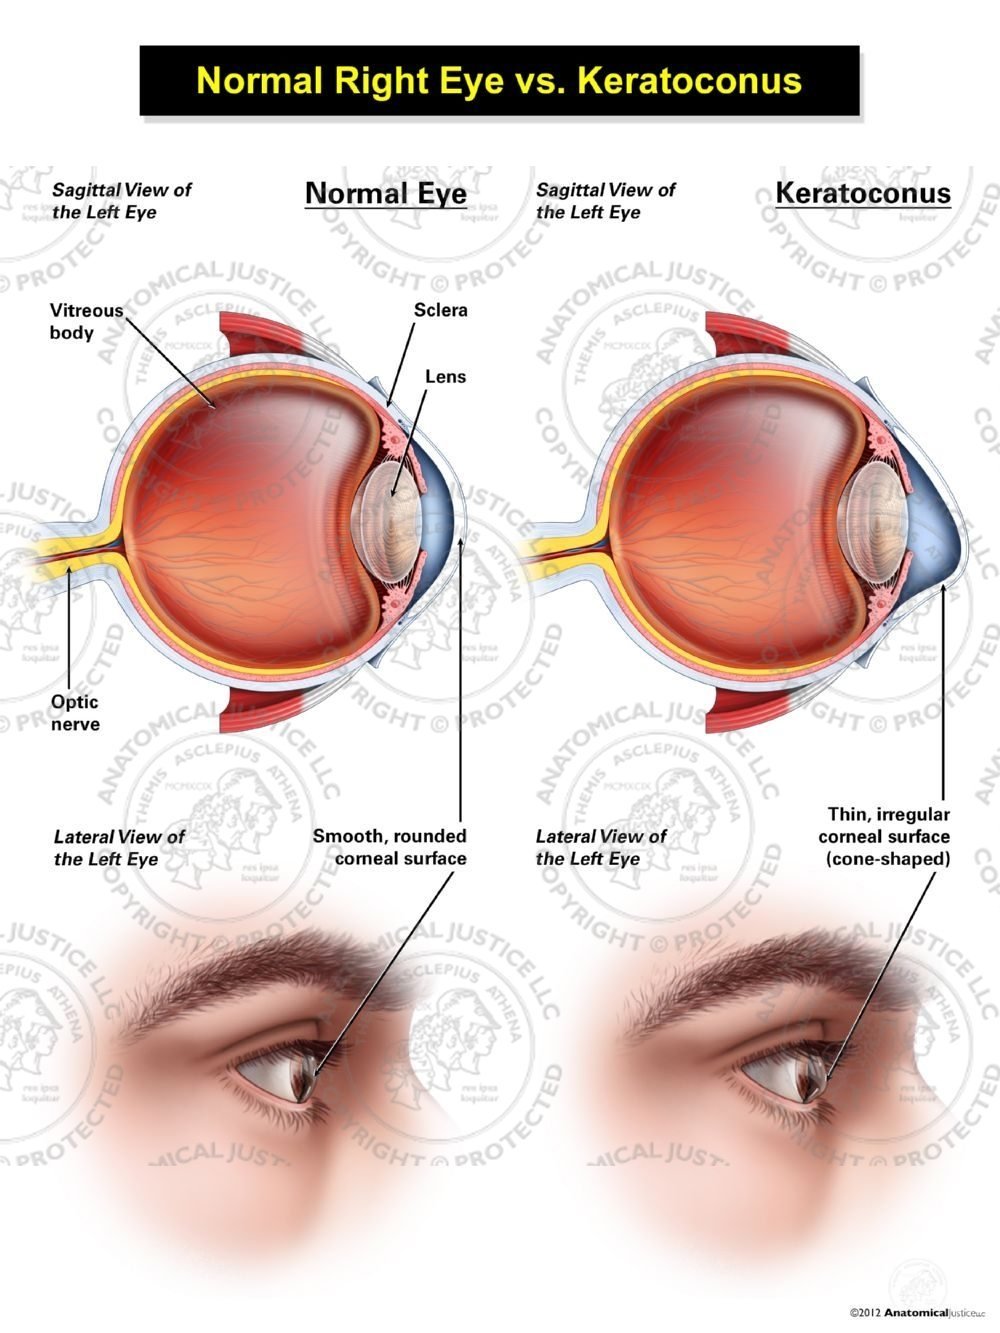 Normal Right Eye vs. Keratoconus